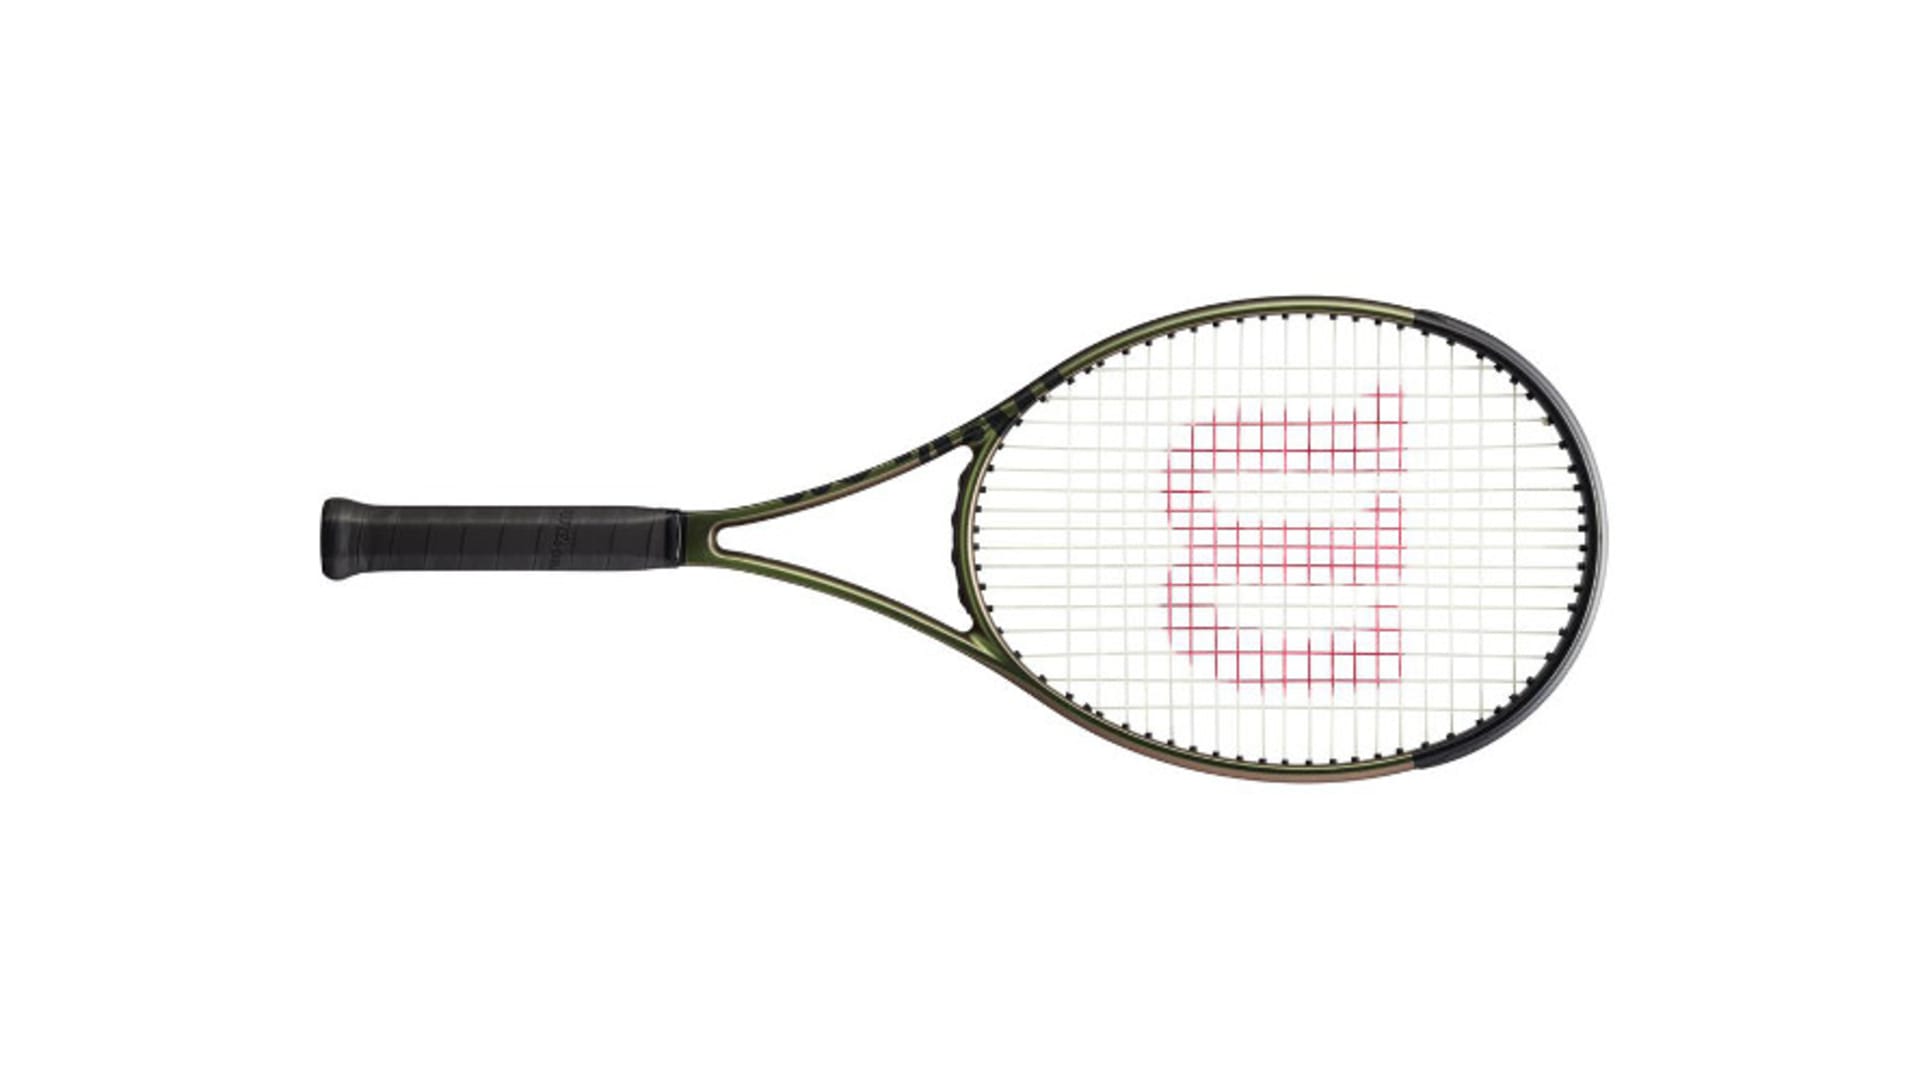 Racquet Review: Wilson Blade 98 v8